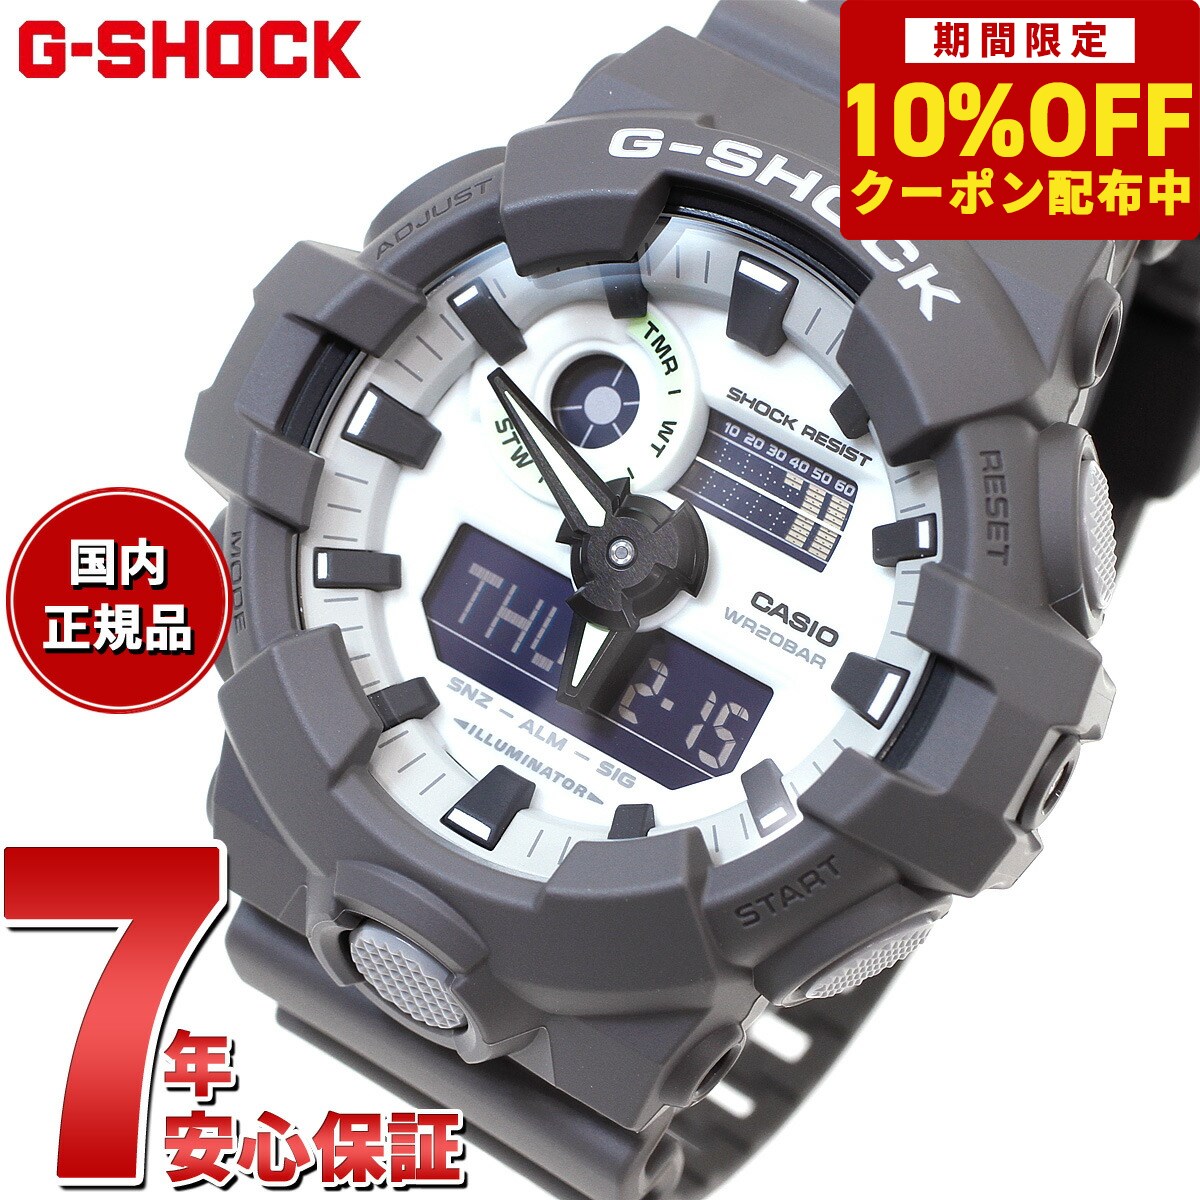 G-SHOCK アナデジ メンズ 腕時計 カシオ CASIO GA-700HD-8AJF HIDDEN GLOW Series グレー